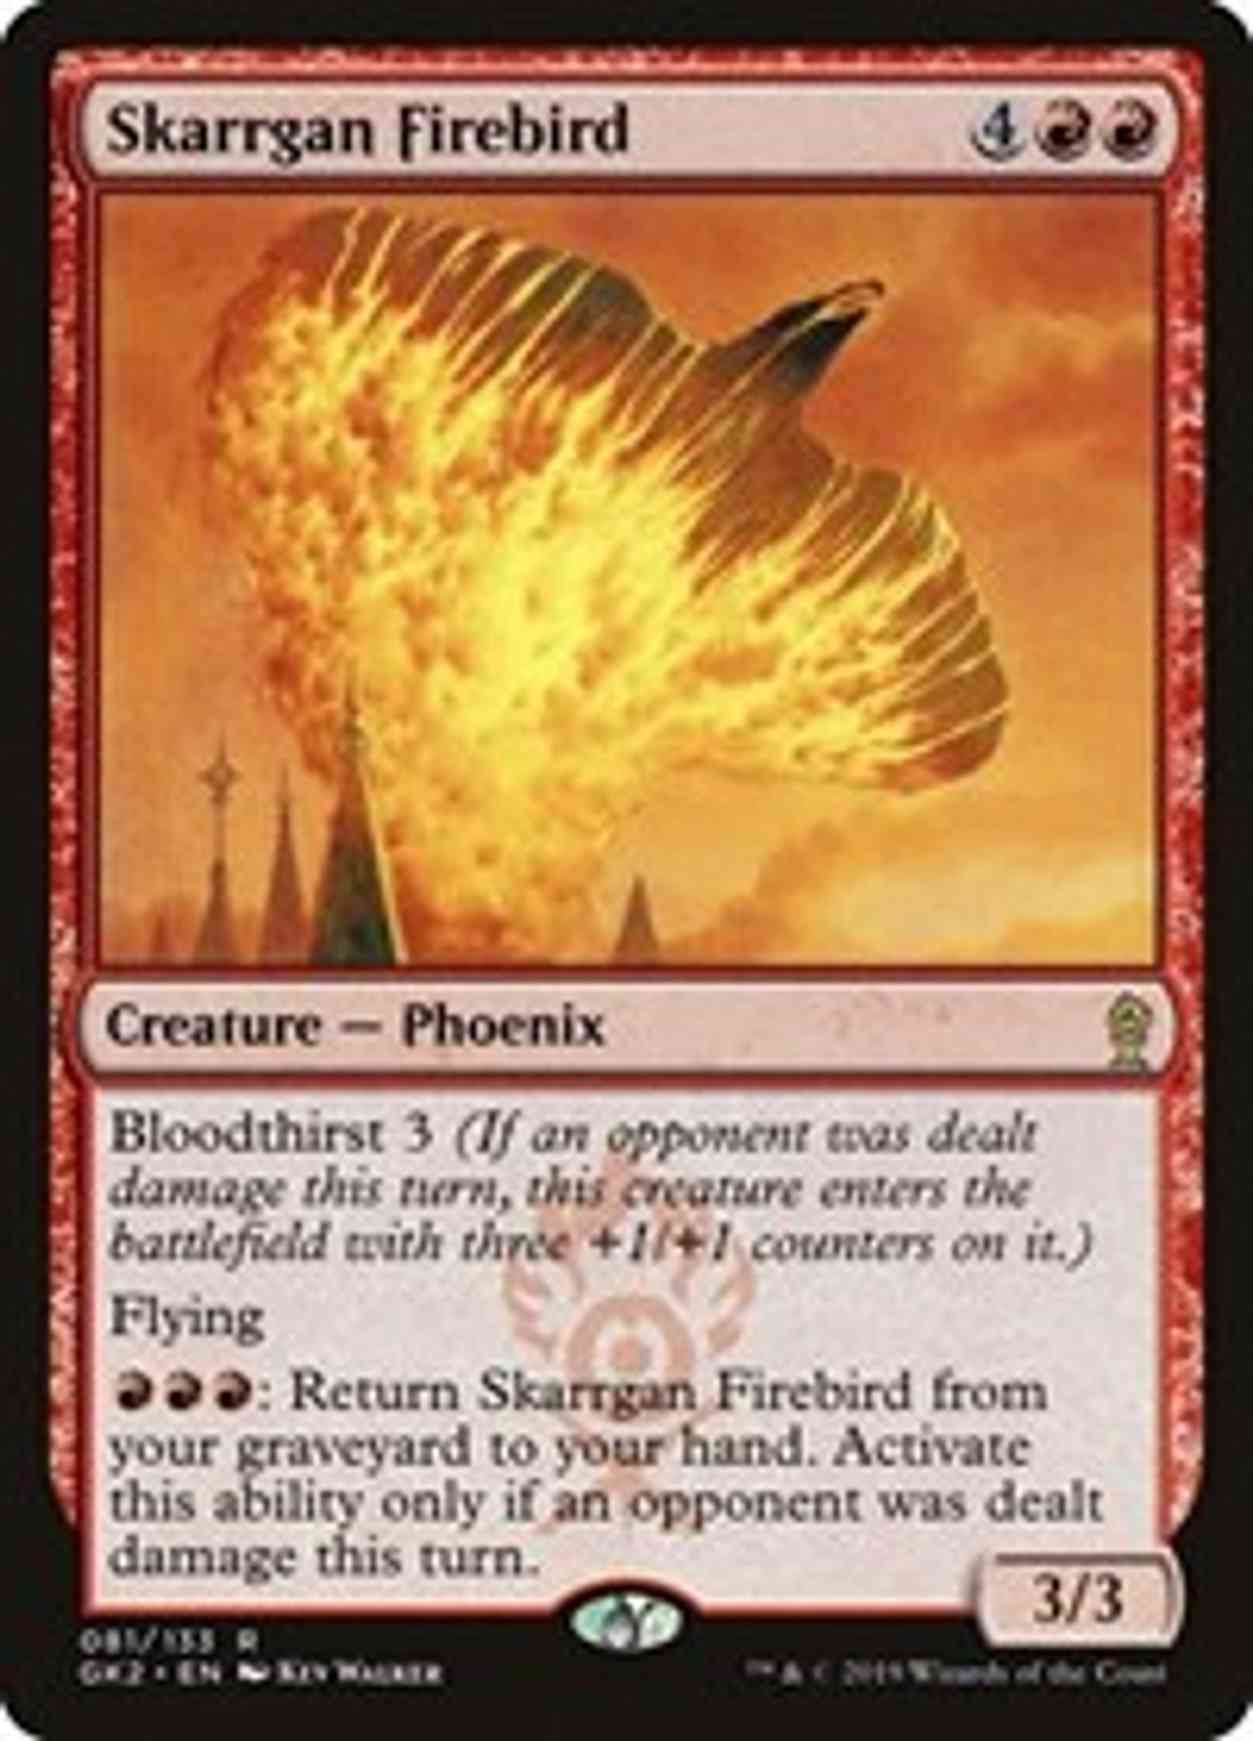 Skarrgan Firebird magic card front